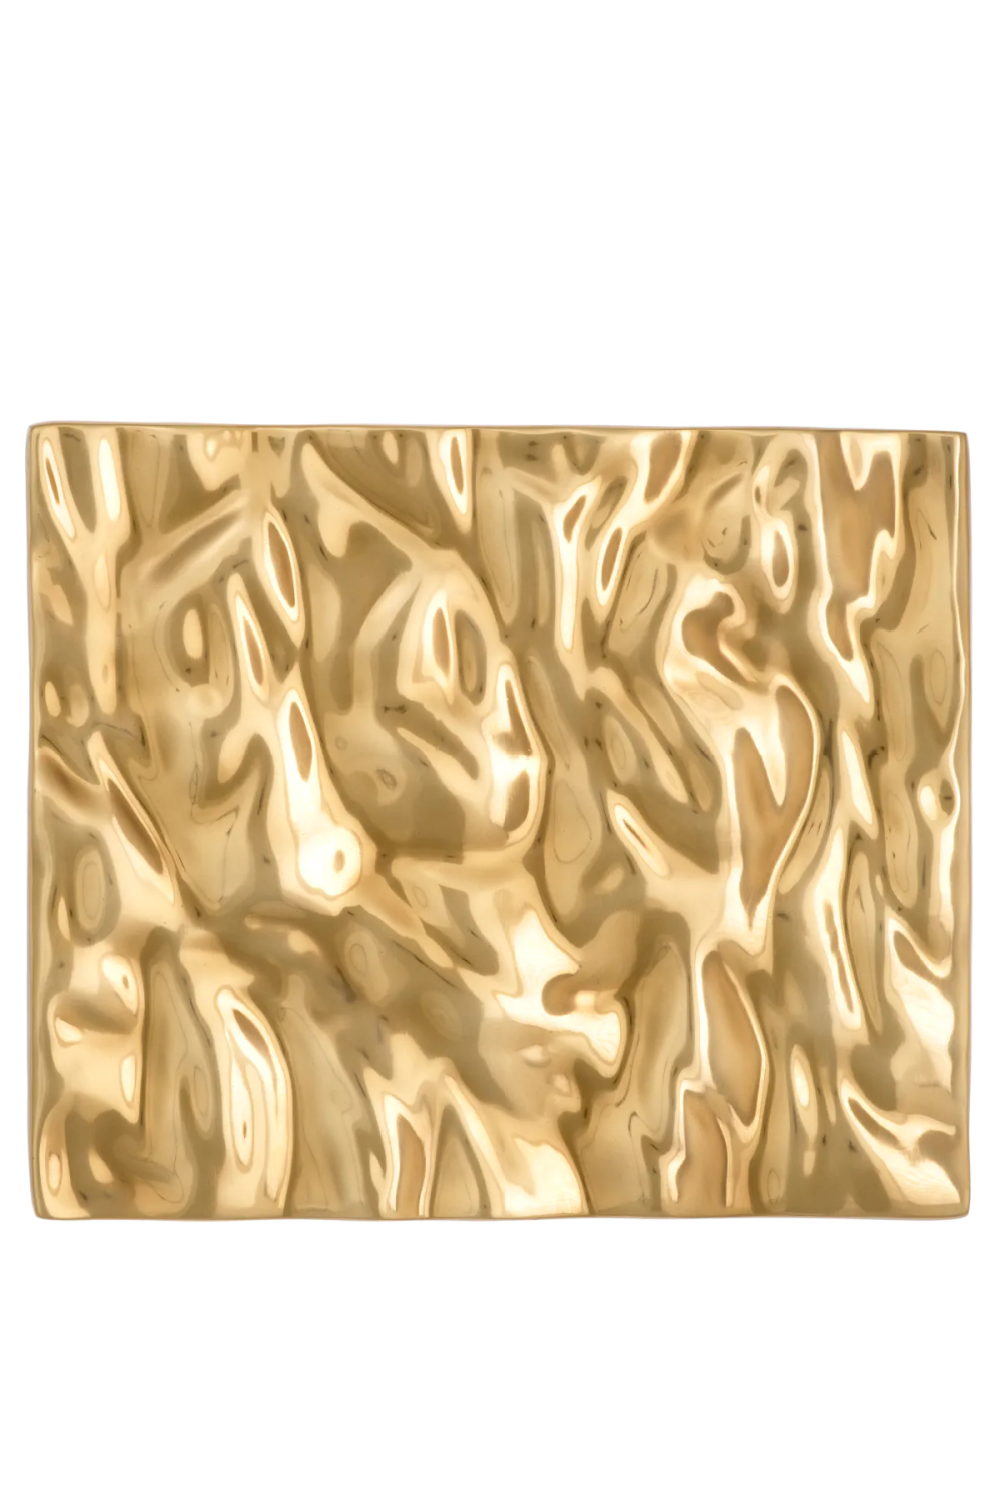 Gold Textured Wall Object | Eichholtz Nulci | Oroa.com